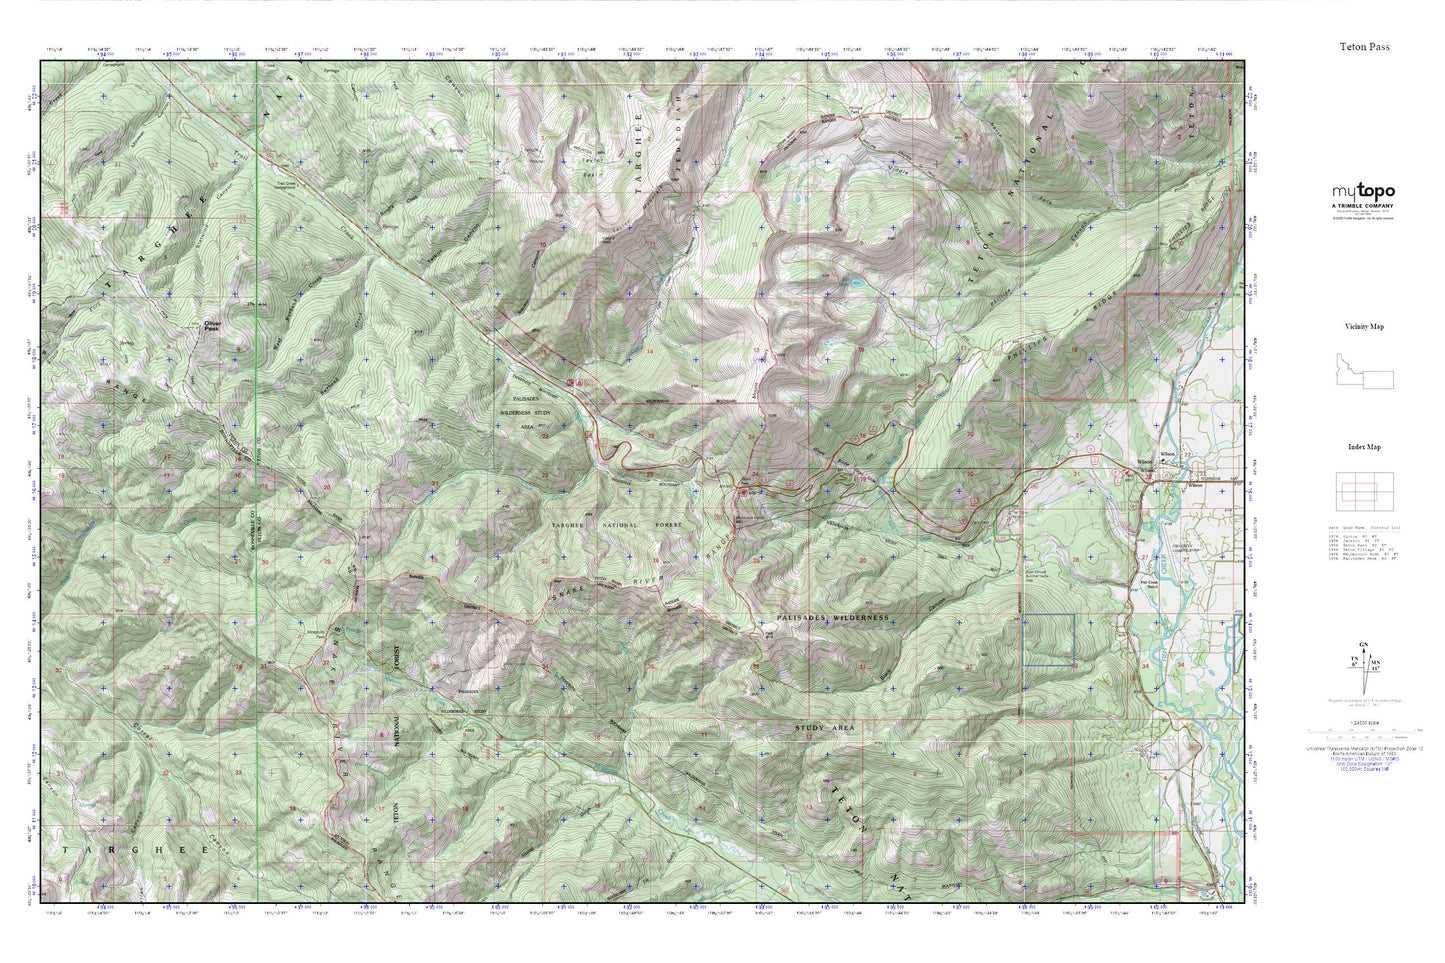 Teton Pass MyTopo Explorer Series Map Image